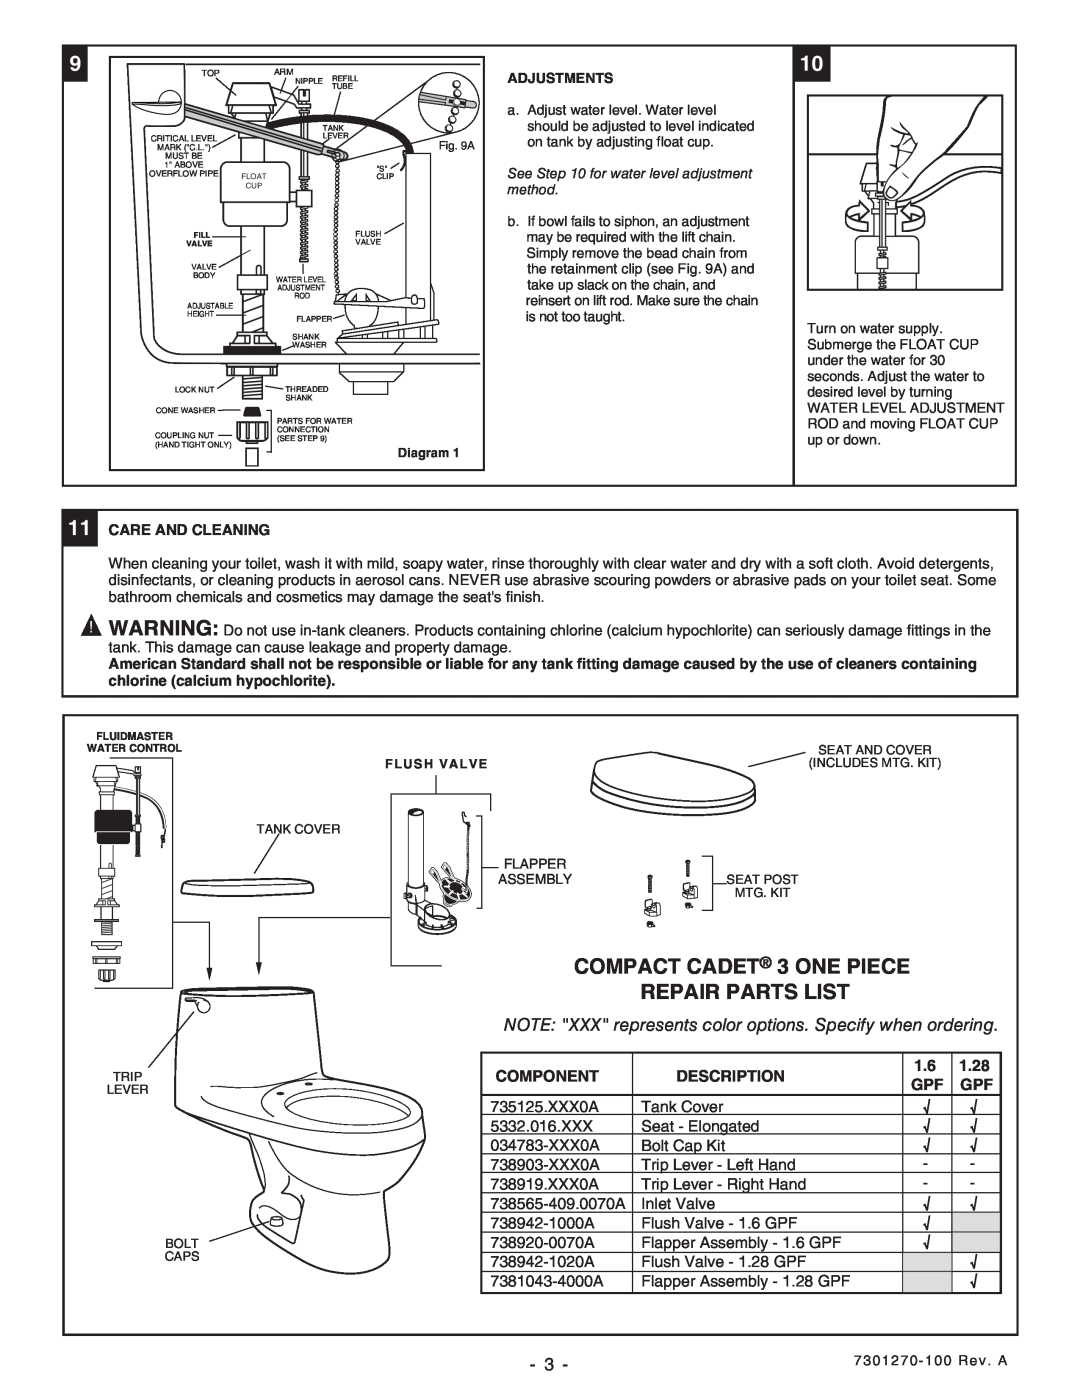 American Standard 2568 installation instructions COMPACT CADET 3 ONE PIECE, Repair Parts List, Component, Description, 1.28 